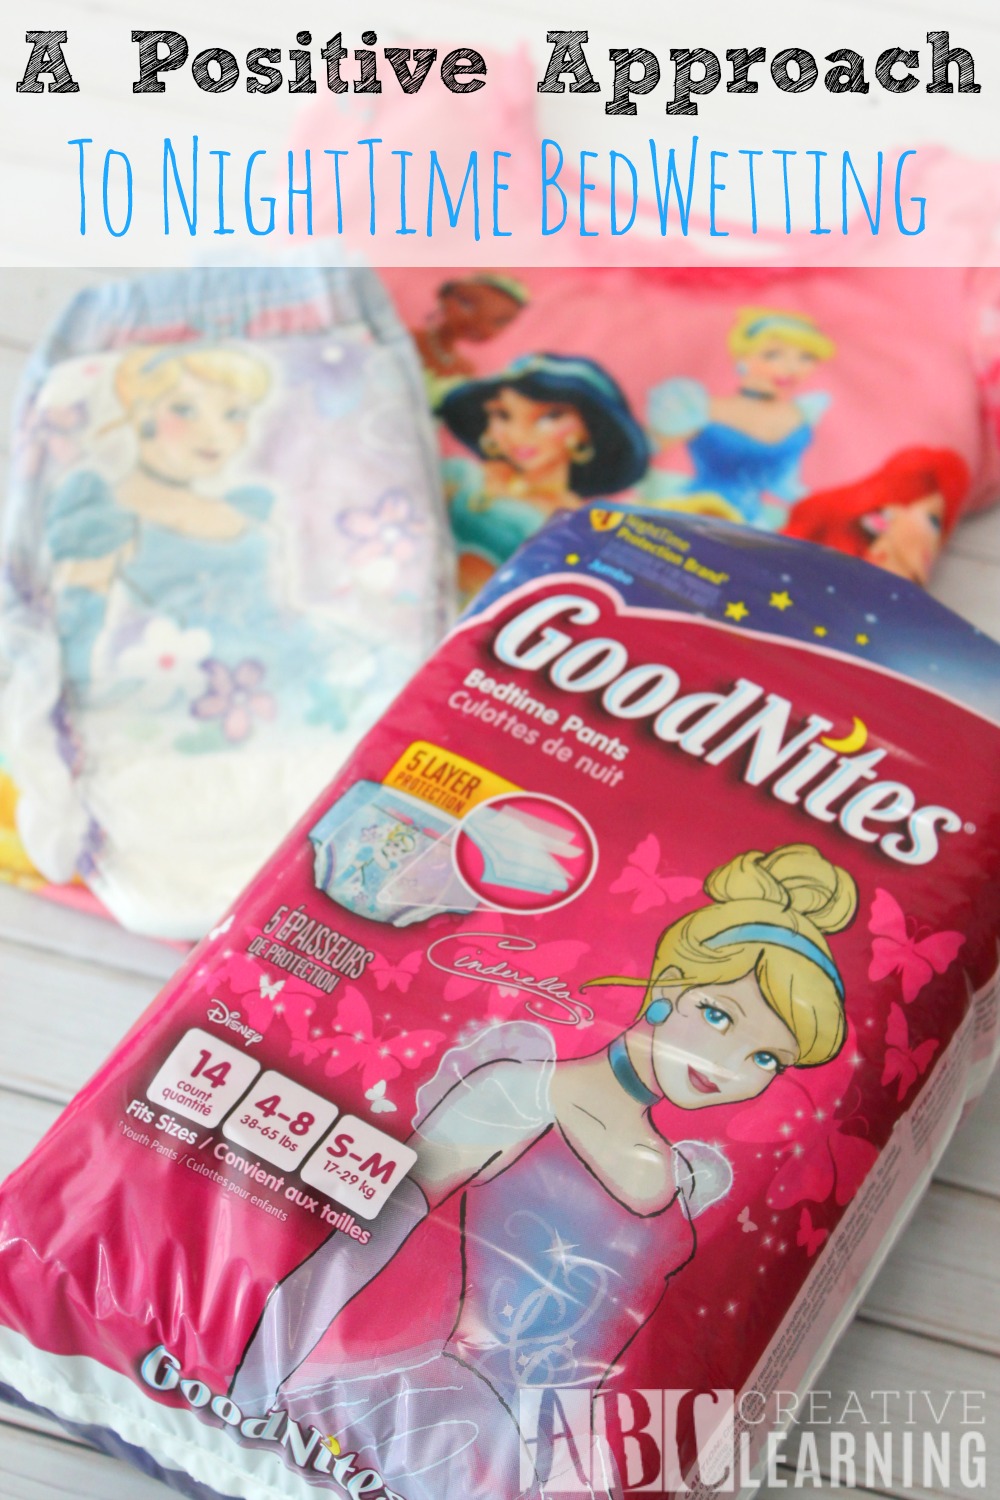 GoodNites Underwear, Nighttime, Disney Princess Moana, S/M, Girls